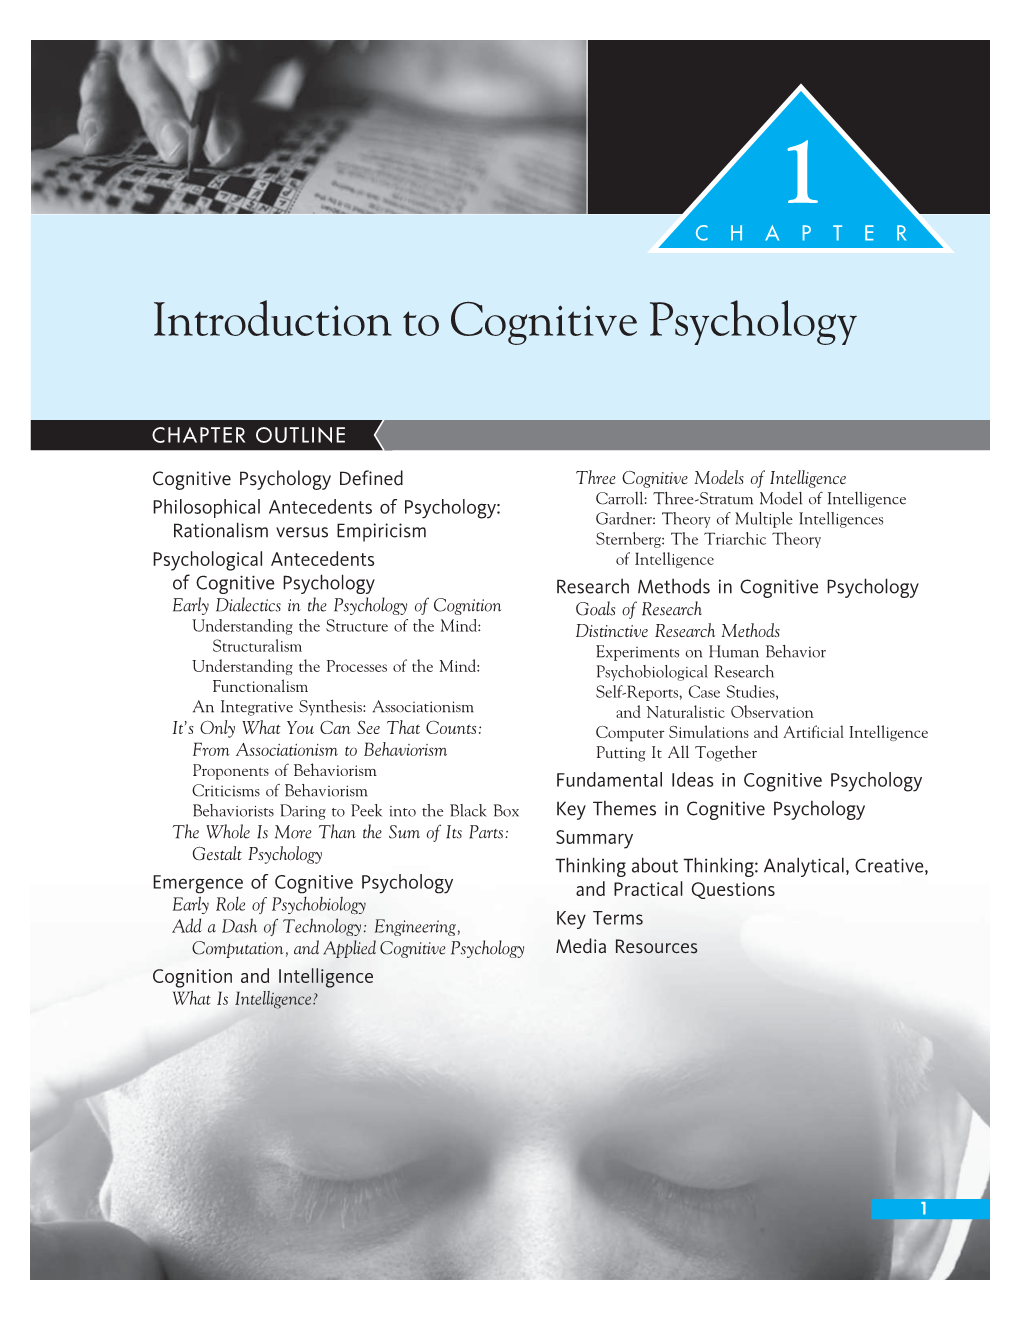 Cognitive Psychology, 6Th Edition by Robert J. Sternberg and Karin Sternberg (Z-Lib.Org)